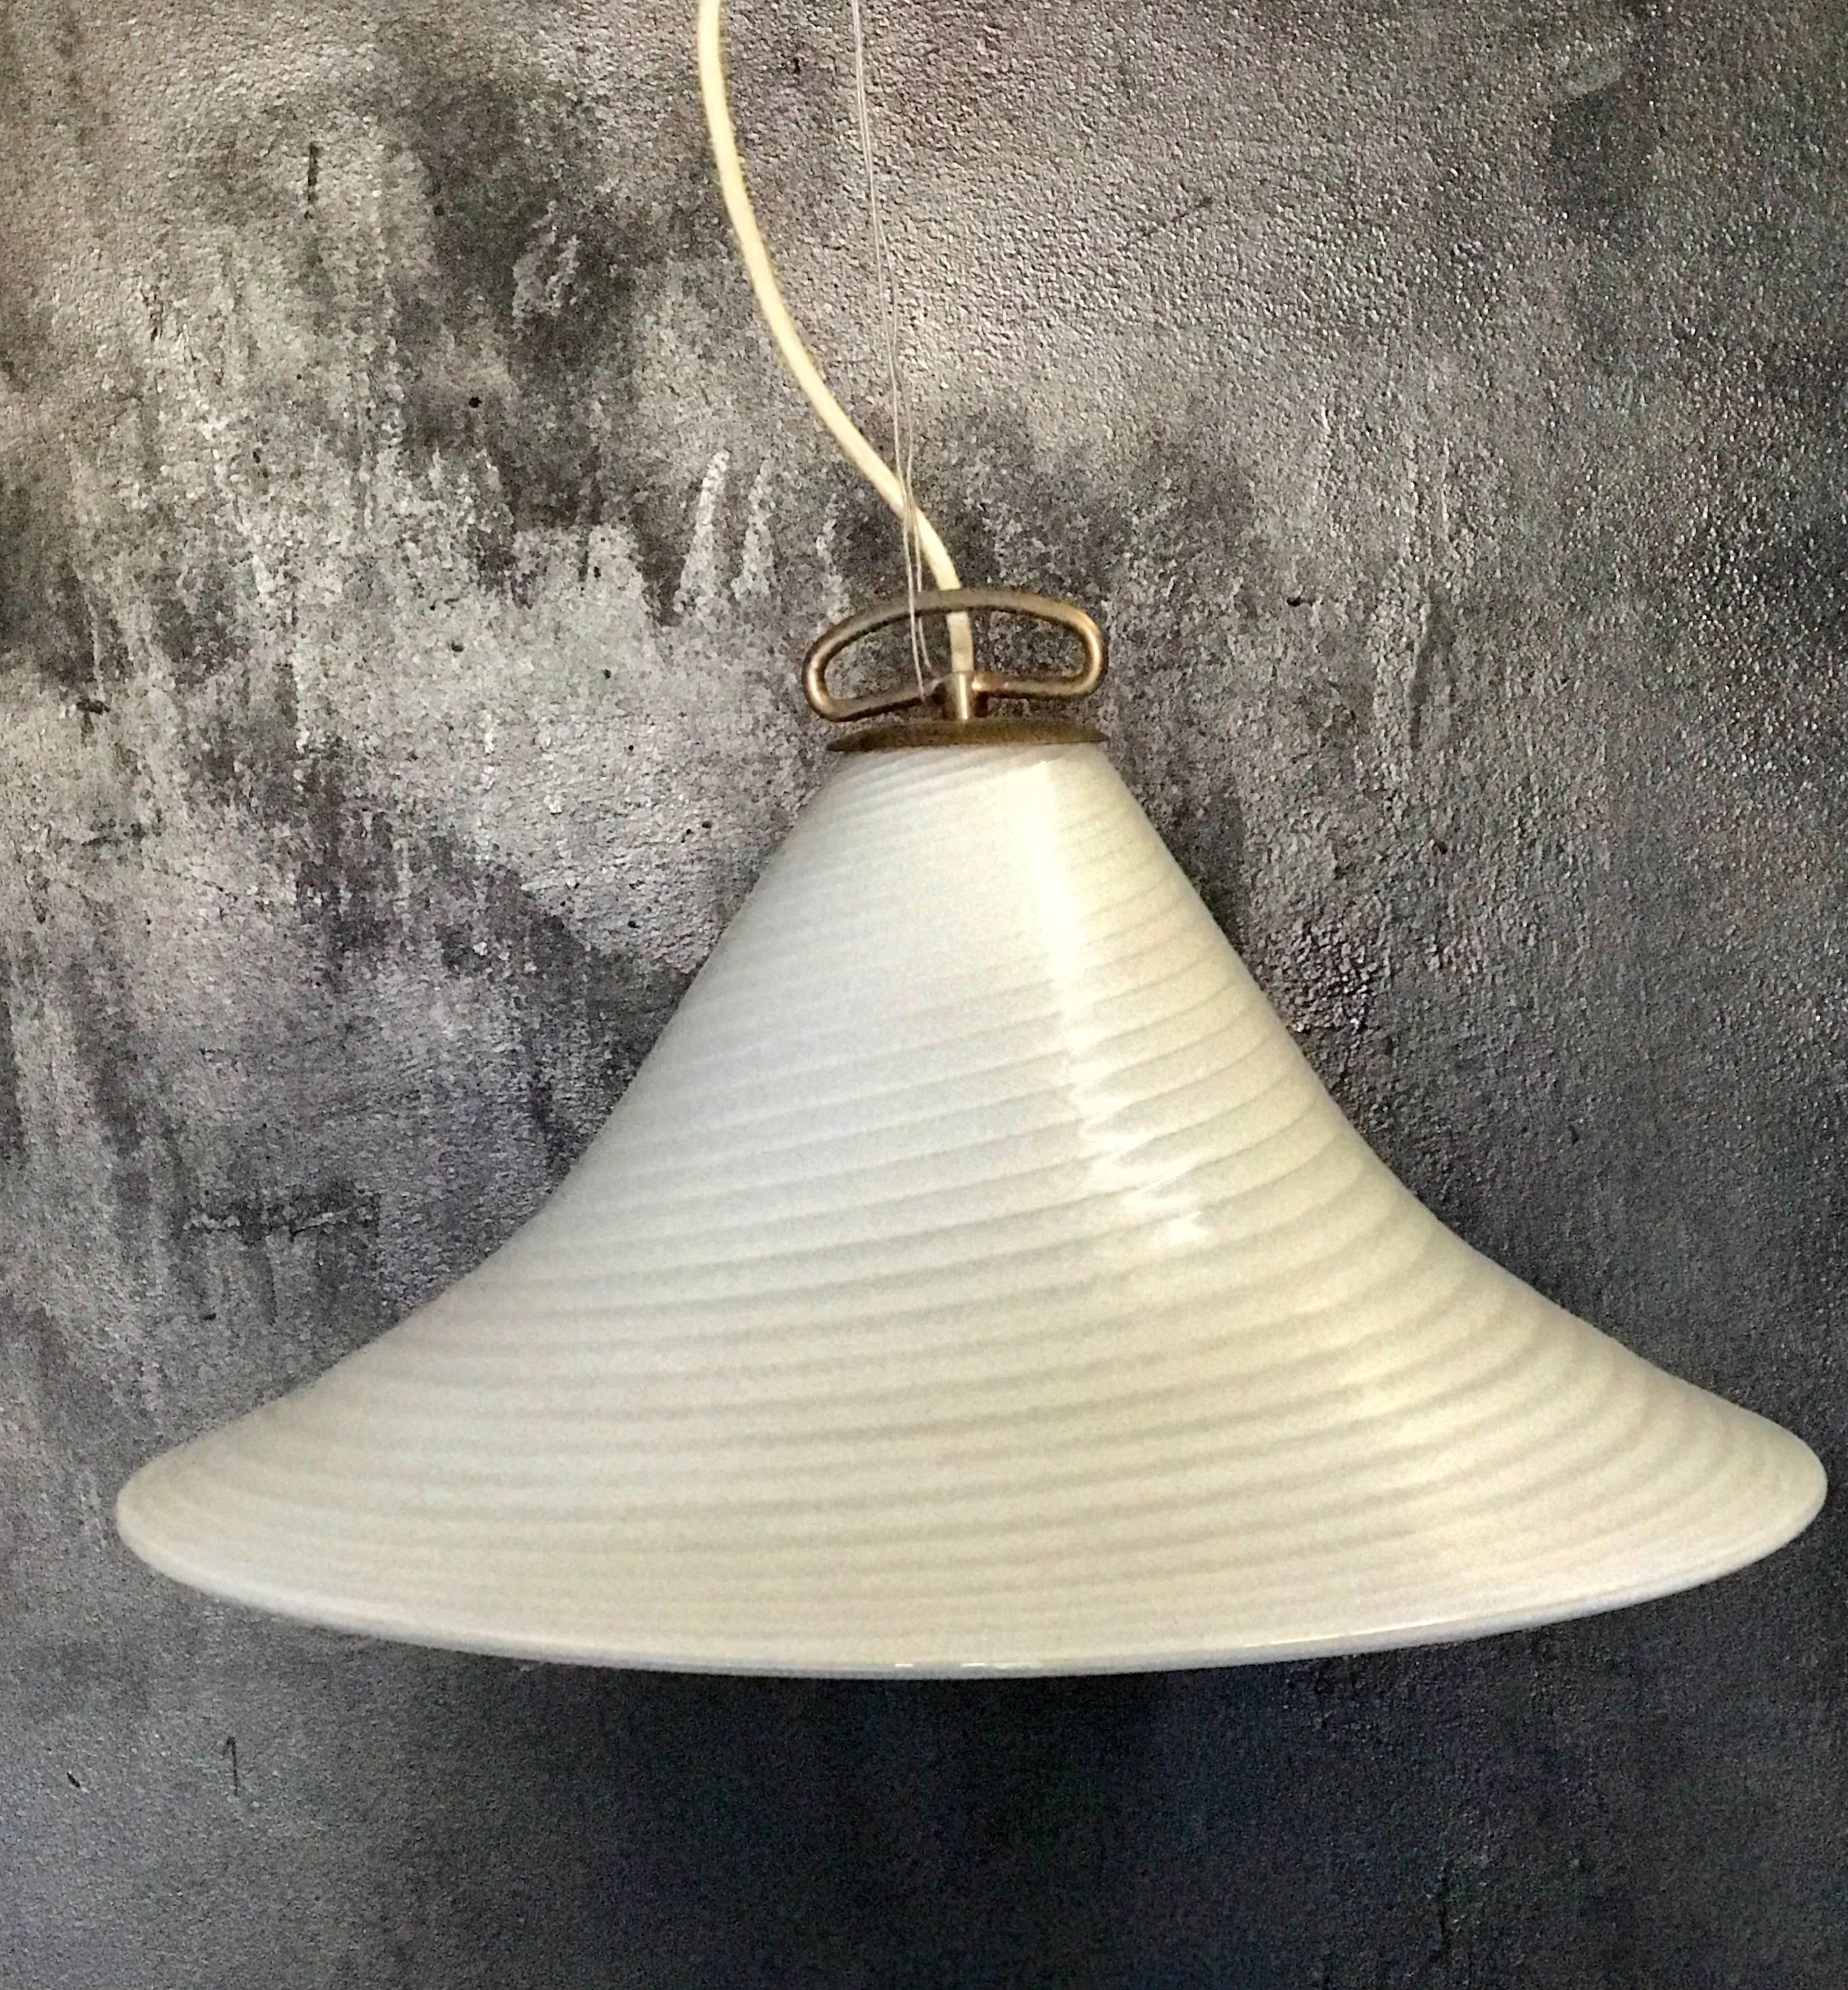 Pendant light from Murano with adjustable height. Beautiful mid-century modern design!